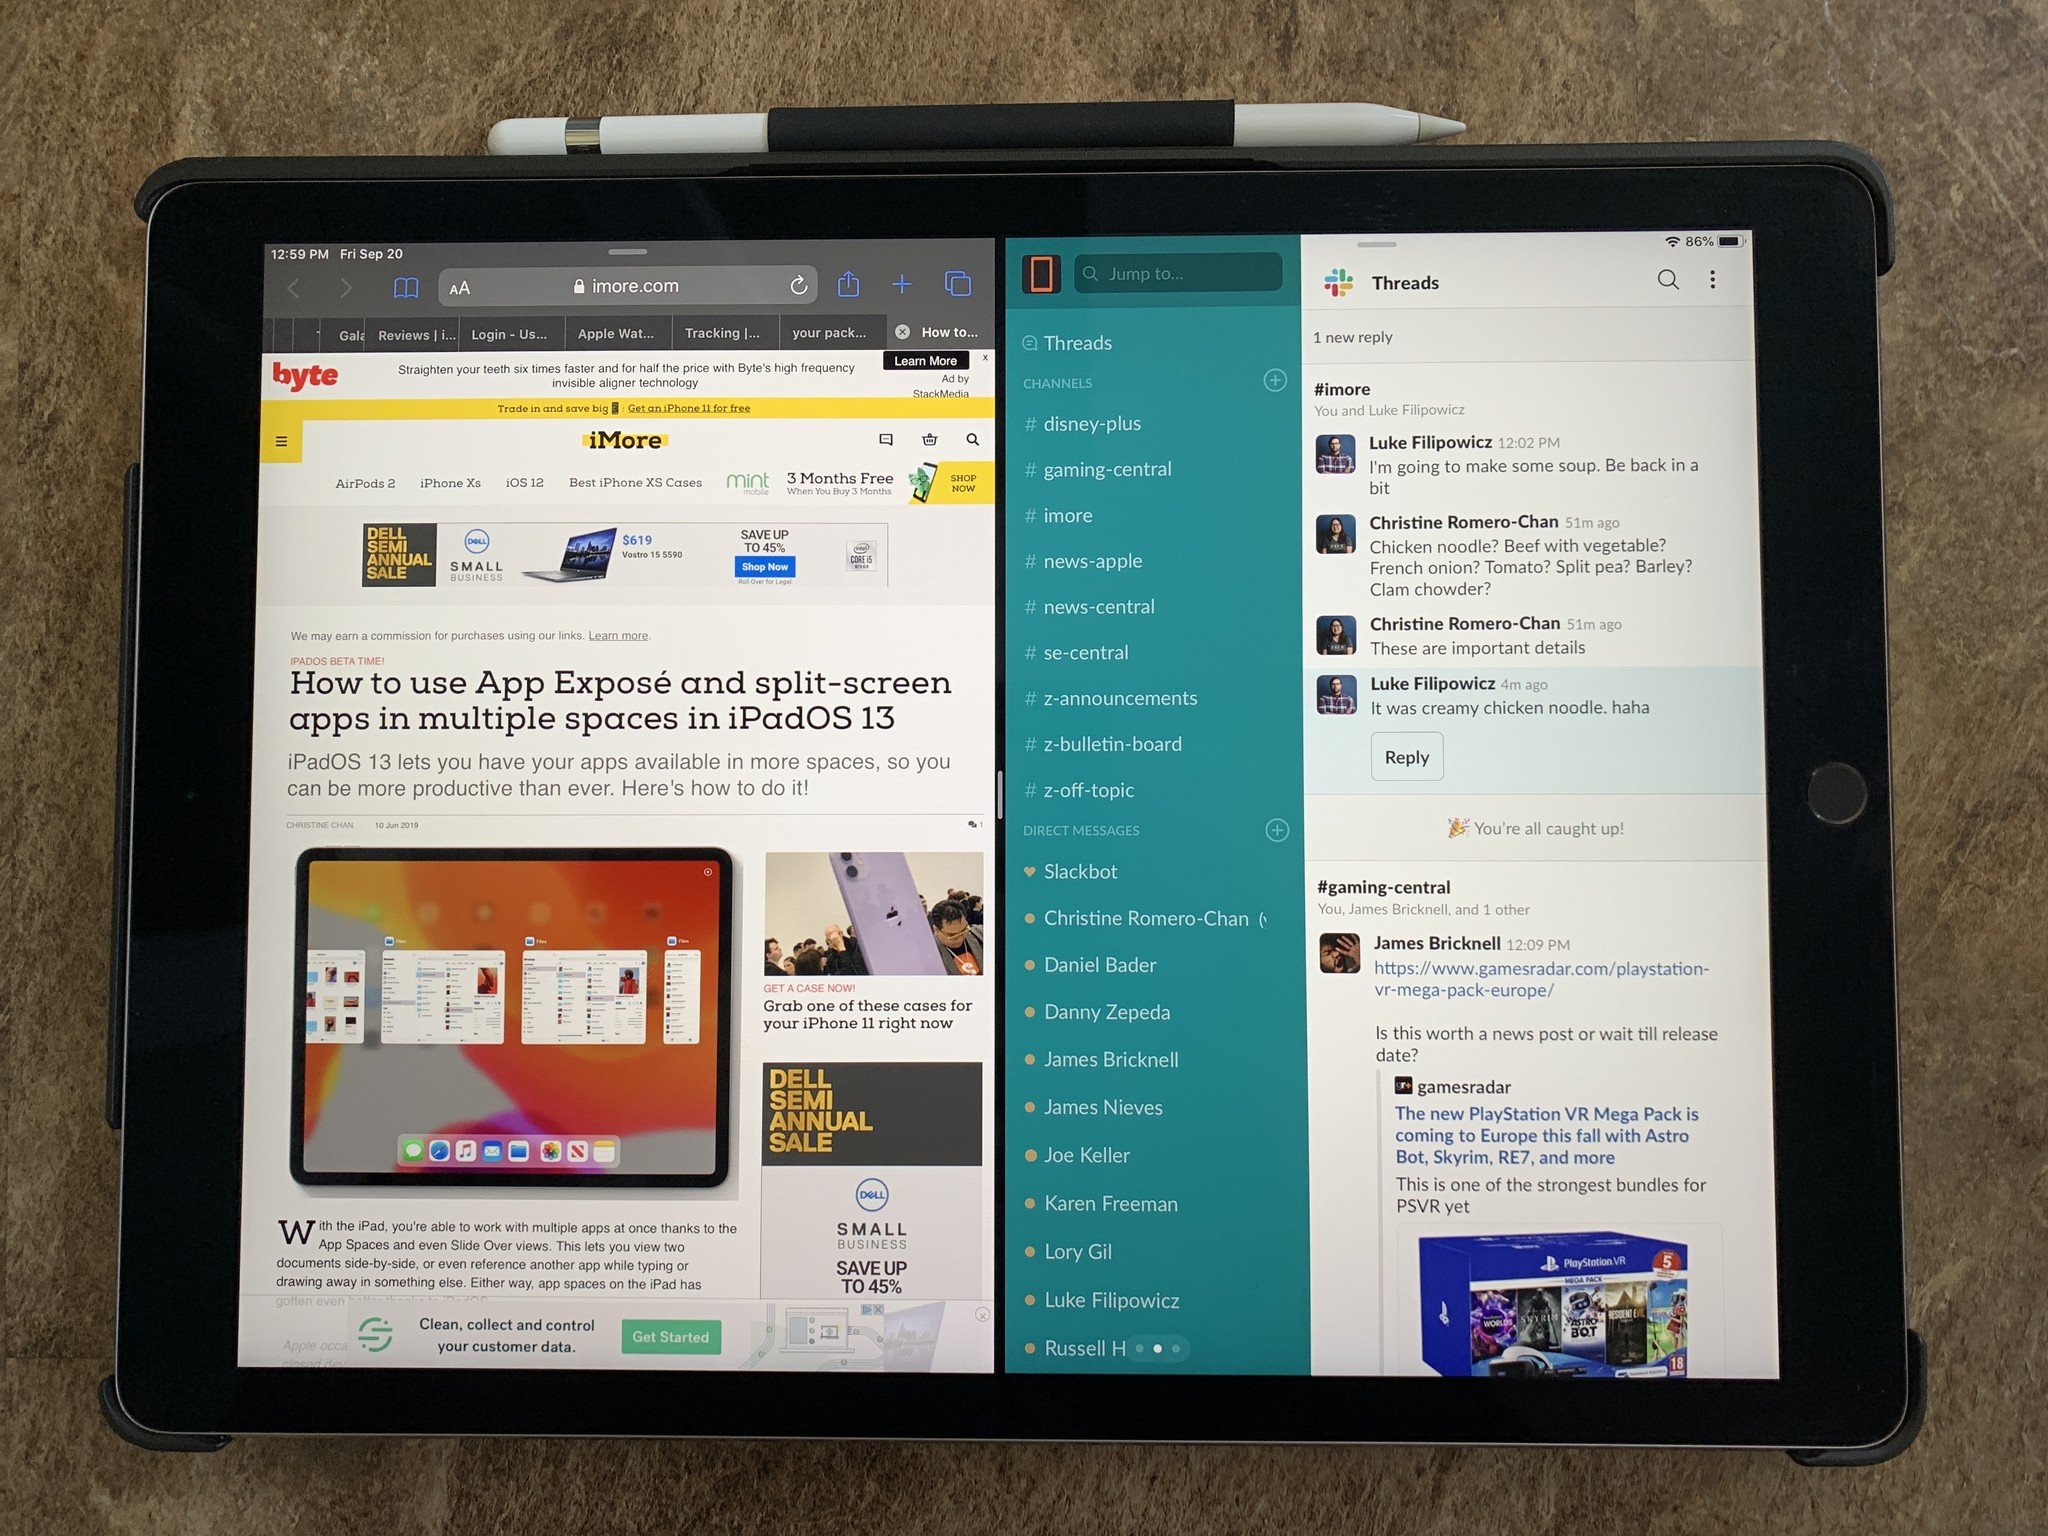 iPad Pro 12.9 with Spli Screen apps